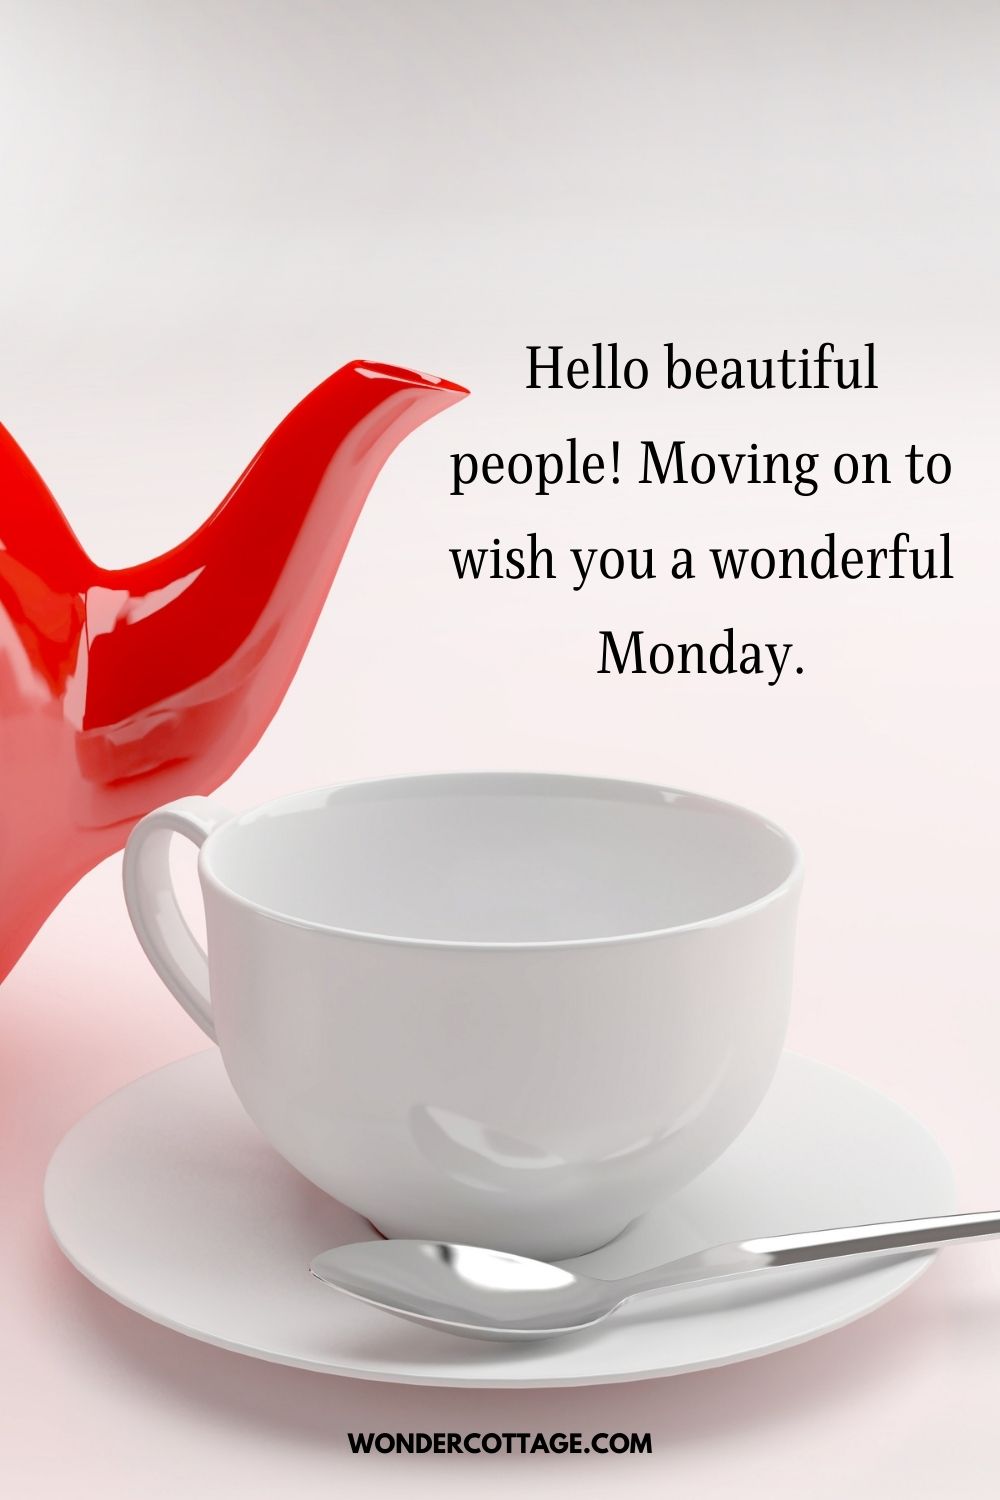 Hello beautiful people! Moving on to wish you a wonderful Monday.